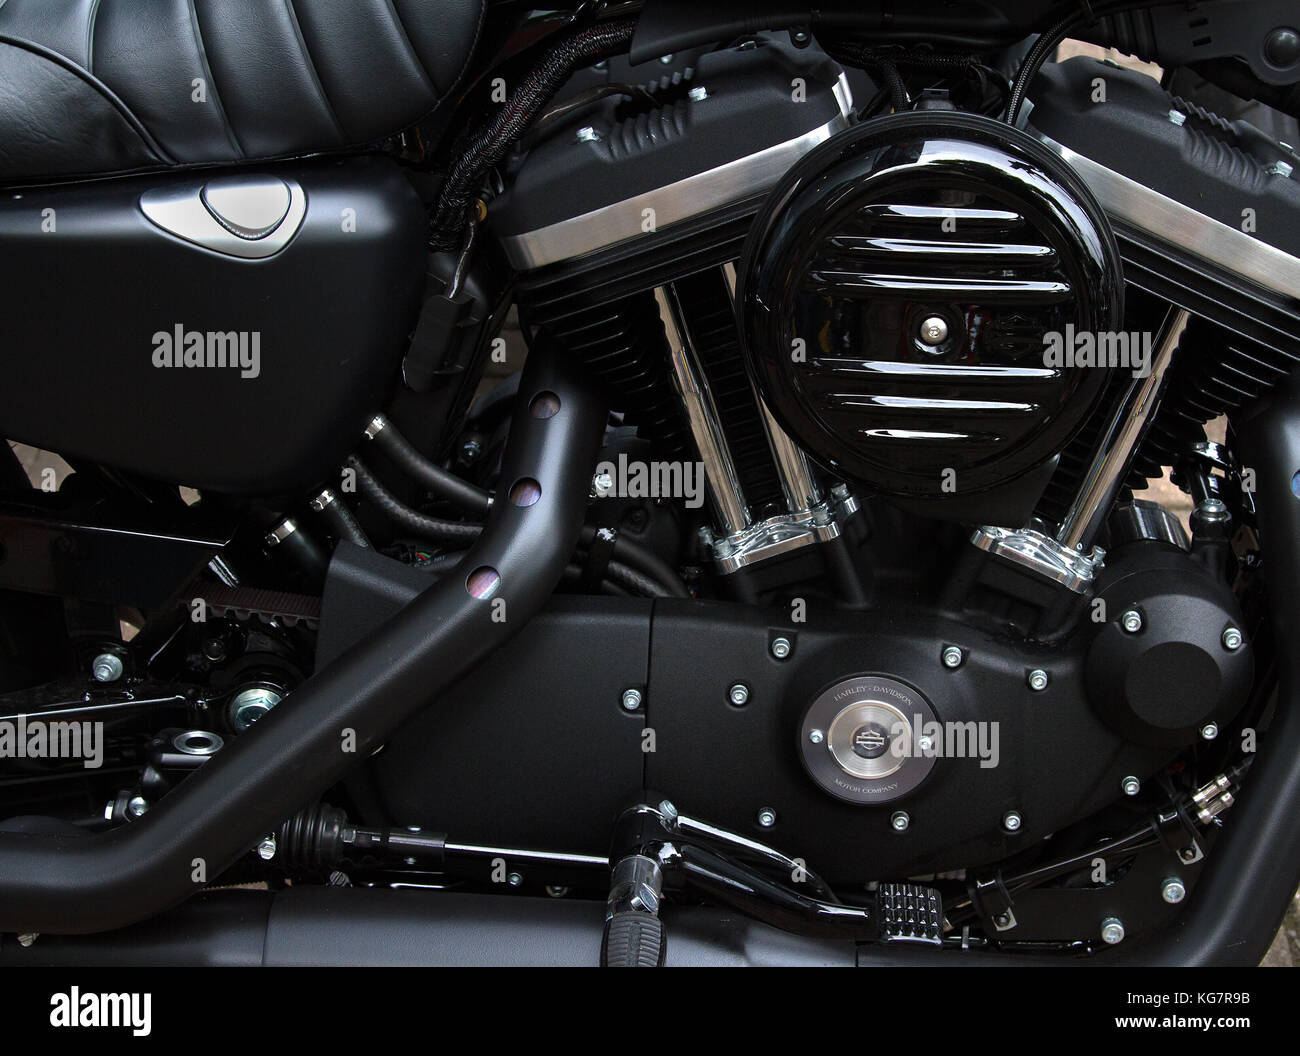 Noir et Argent Moteur Harley Davidson Banque D'Images